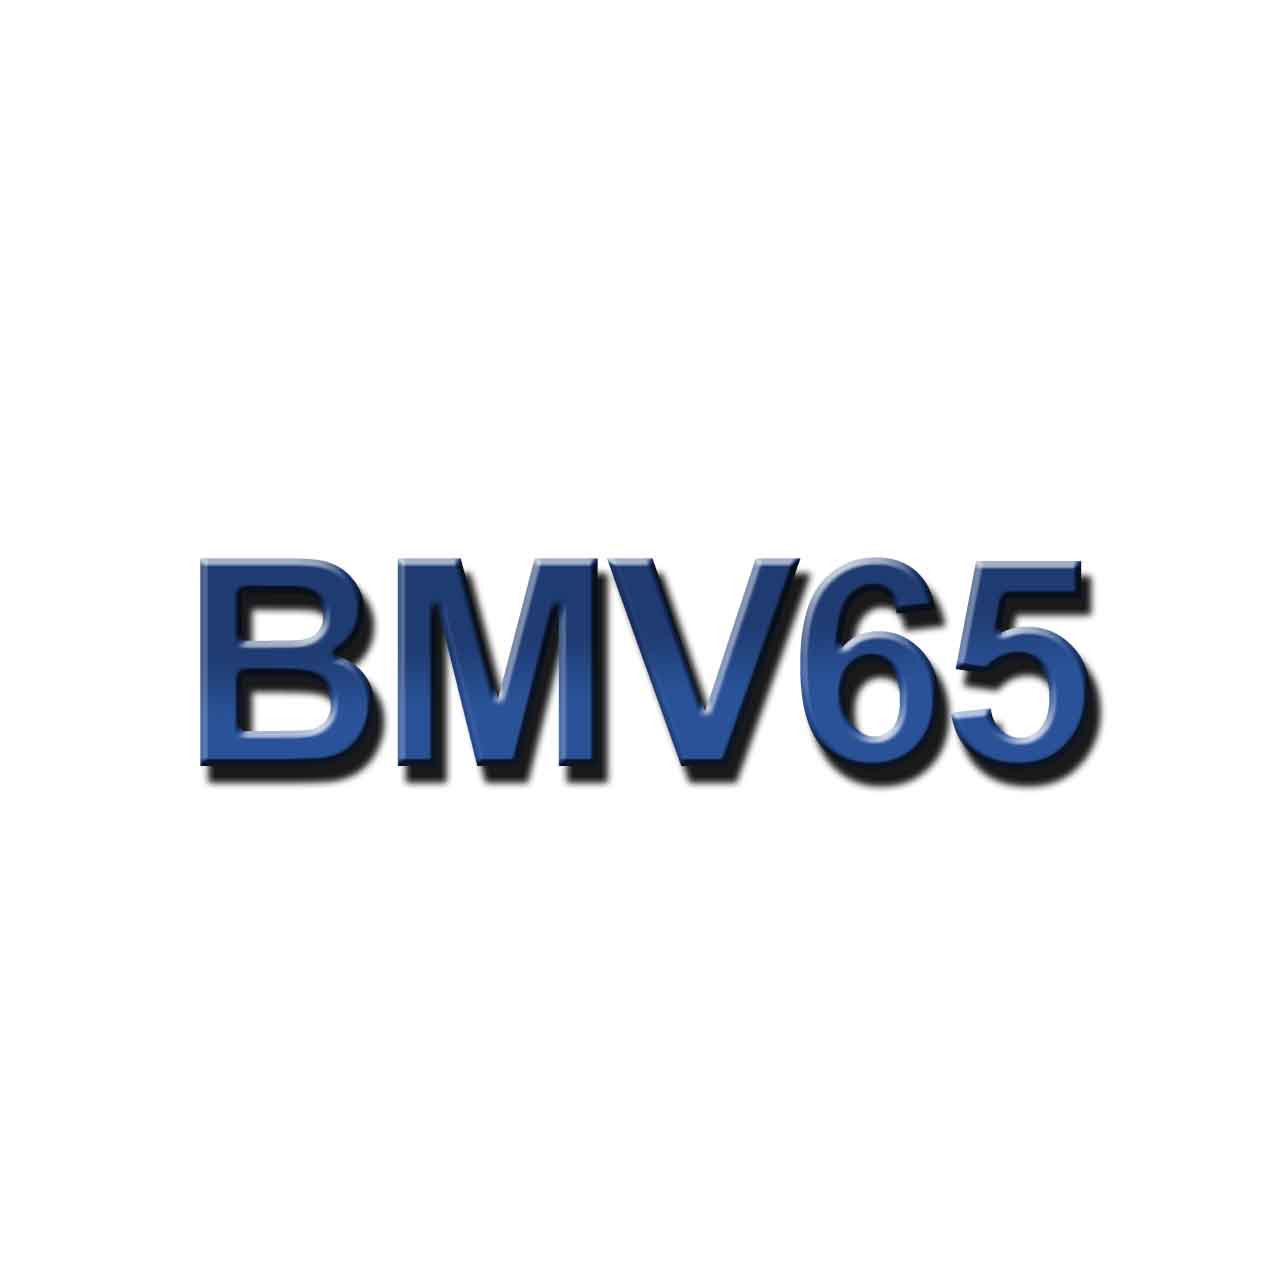 BMV(F)65